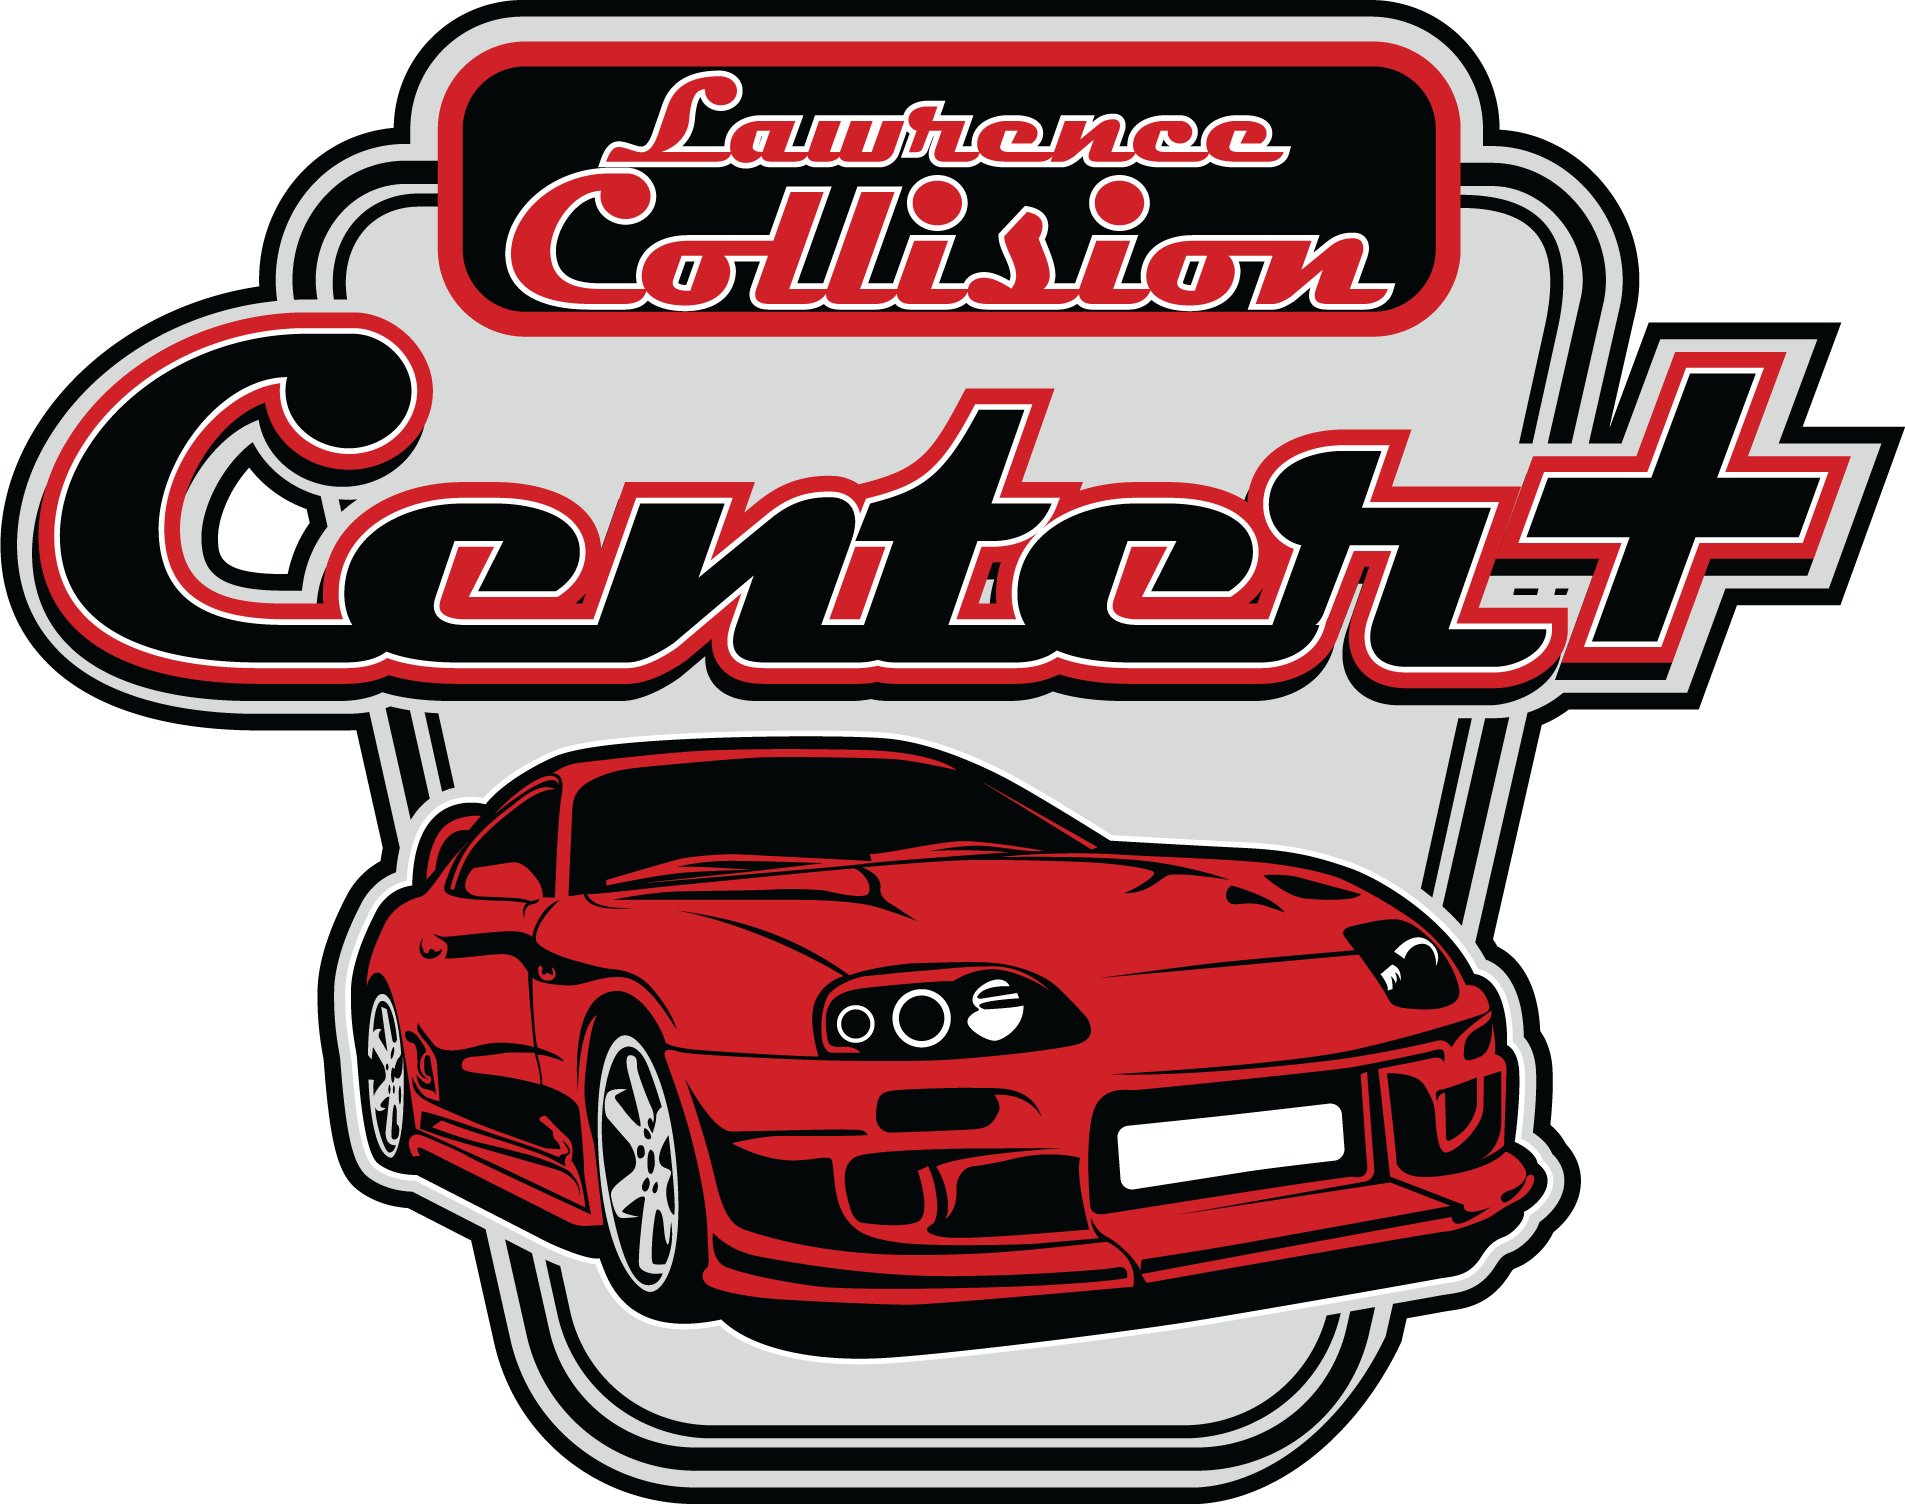 Lawrence Collision Center +, Inc Logo